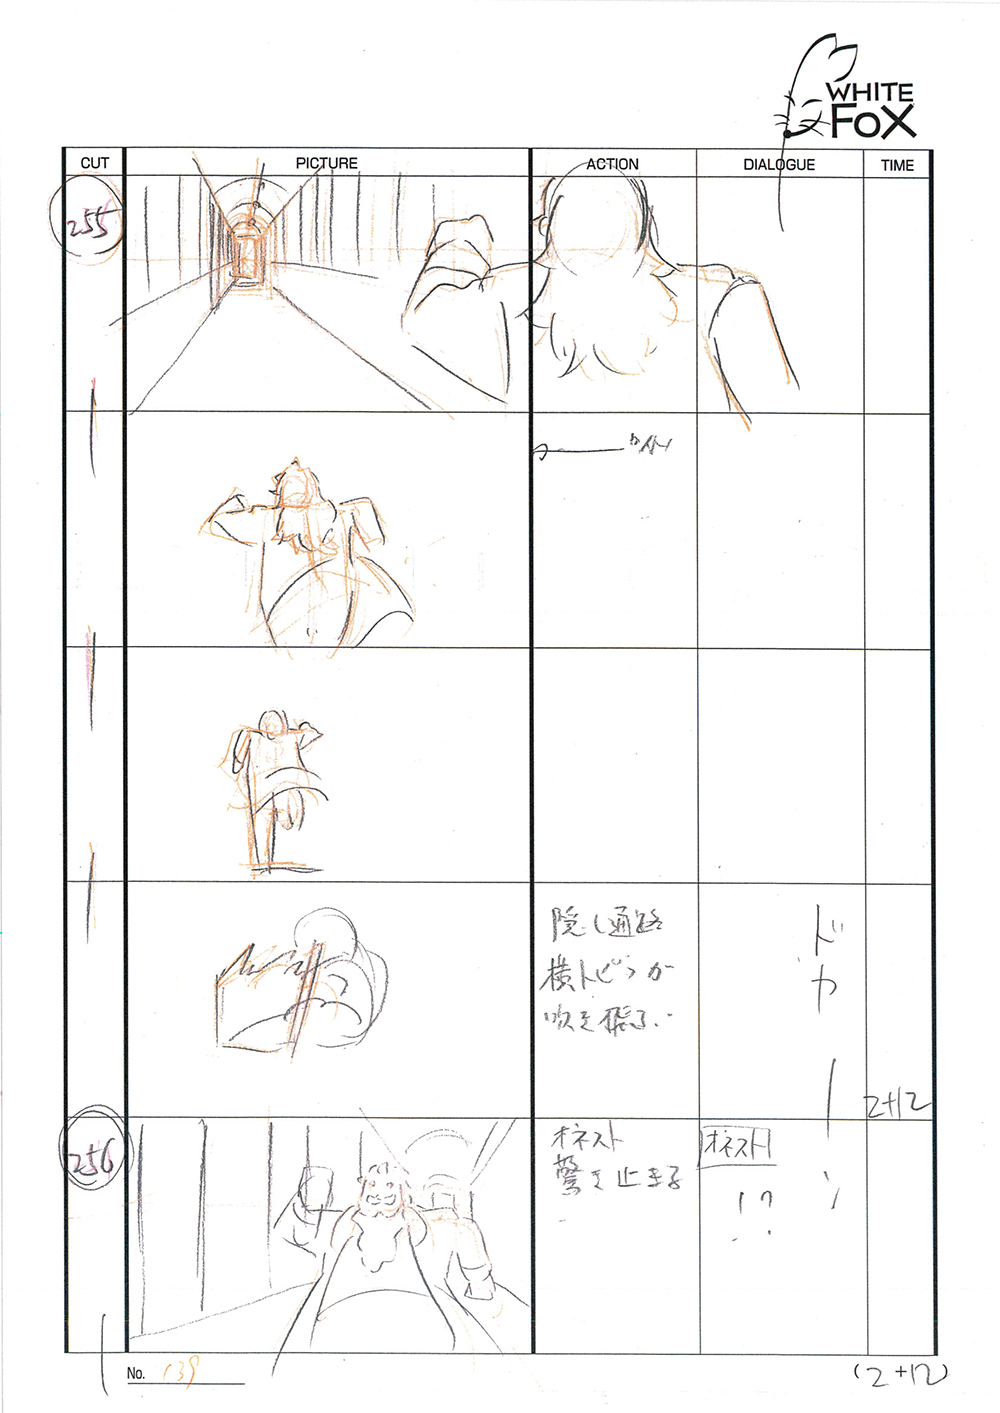 Akame ga Kill Episode 24 Storyboard Leak 144